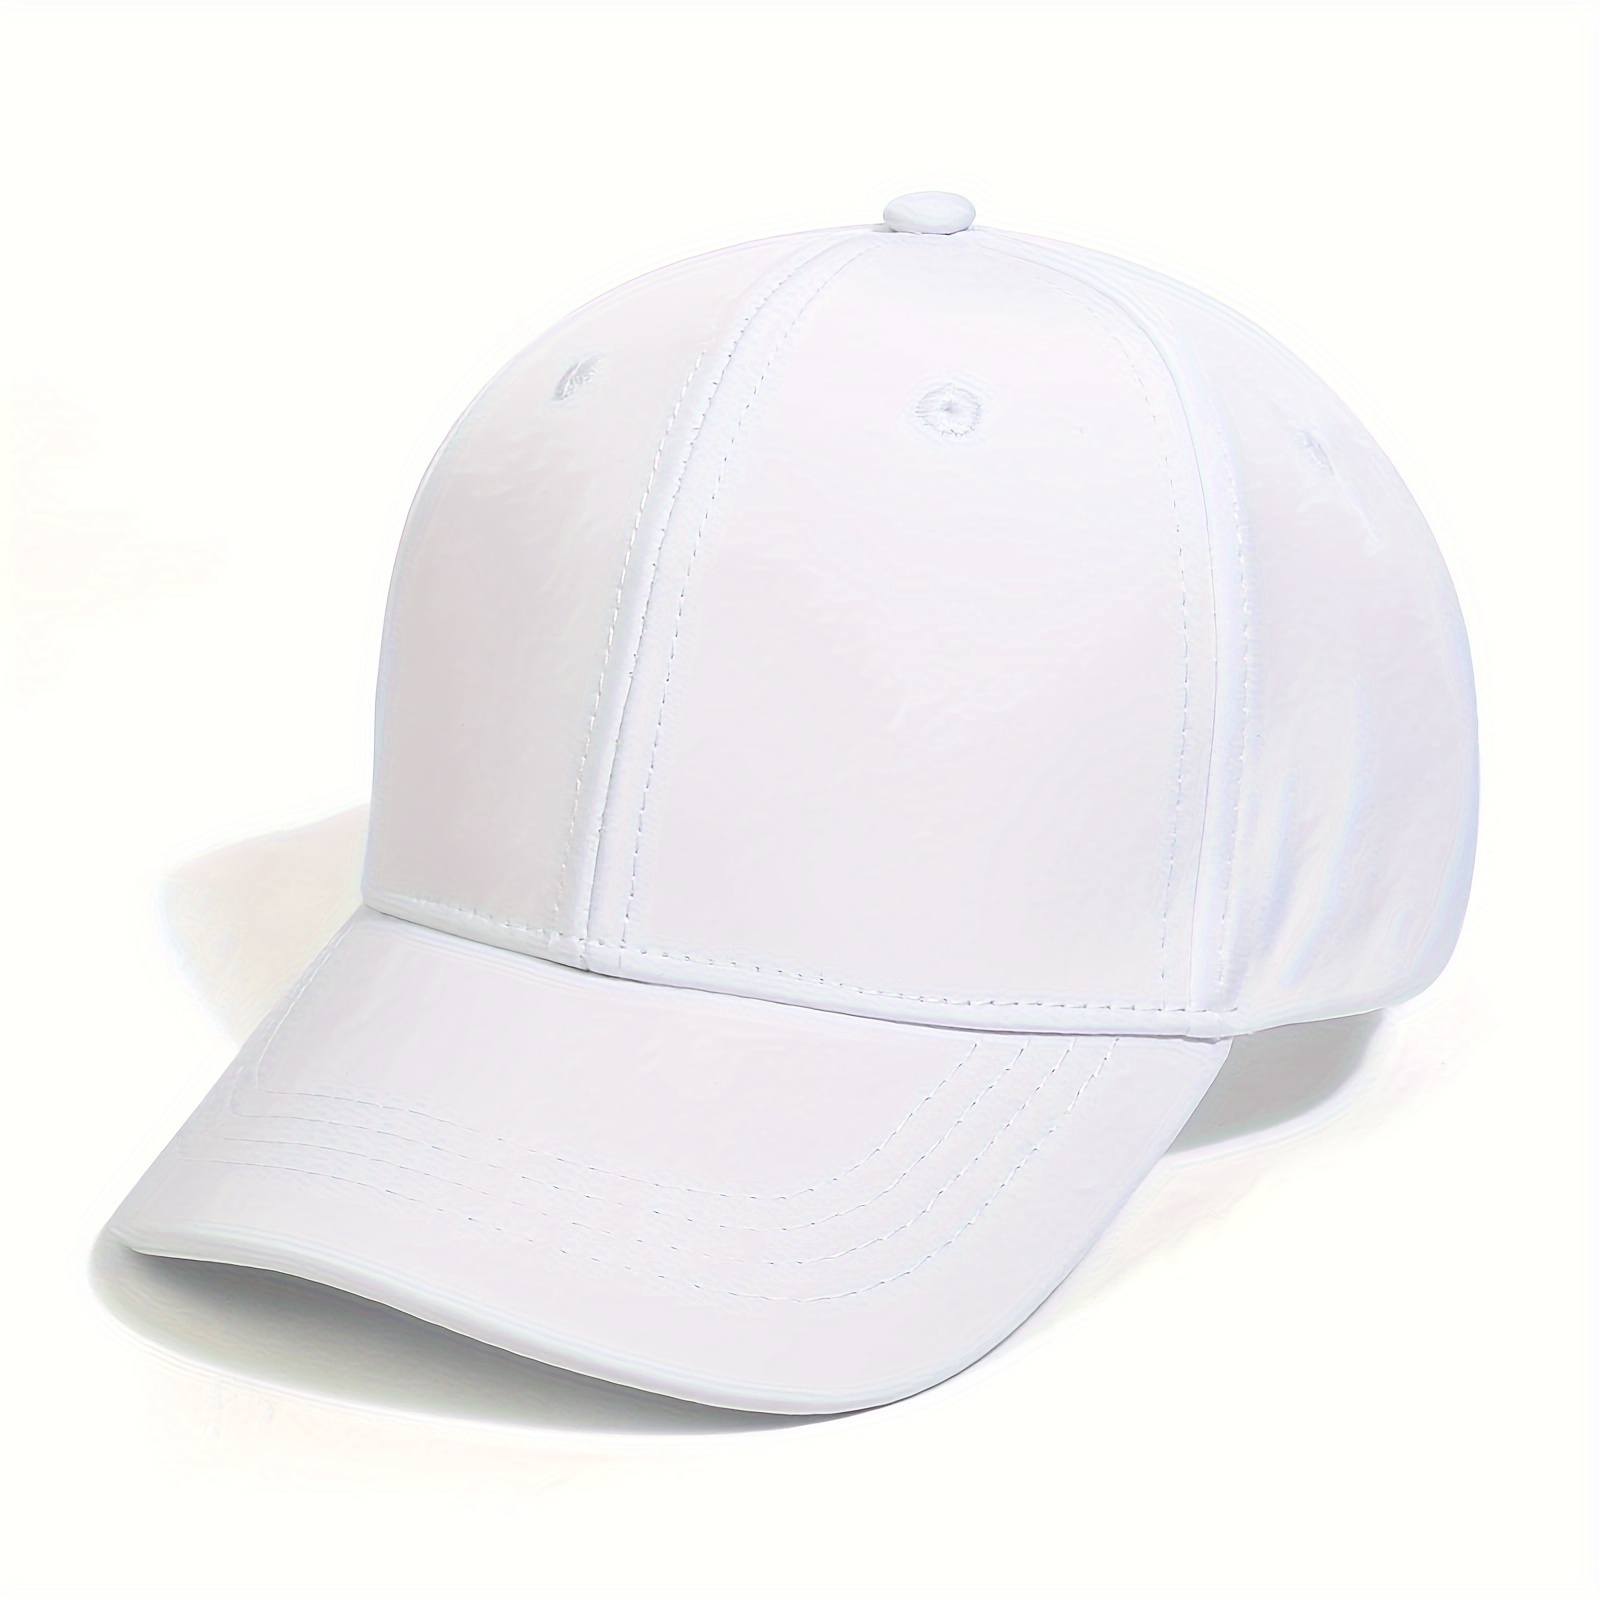 Criss Cross Baseball Cap, Adjustable Plain Hats Quick Dry Mesh